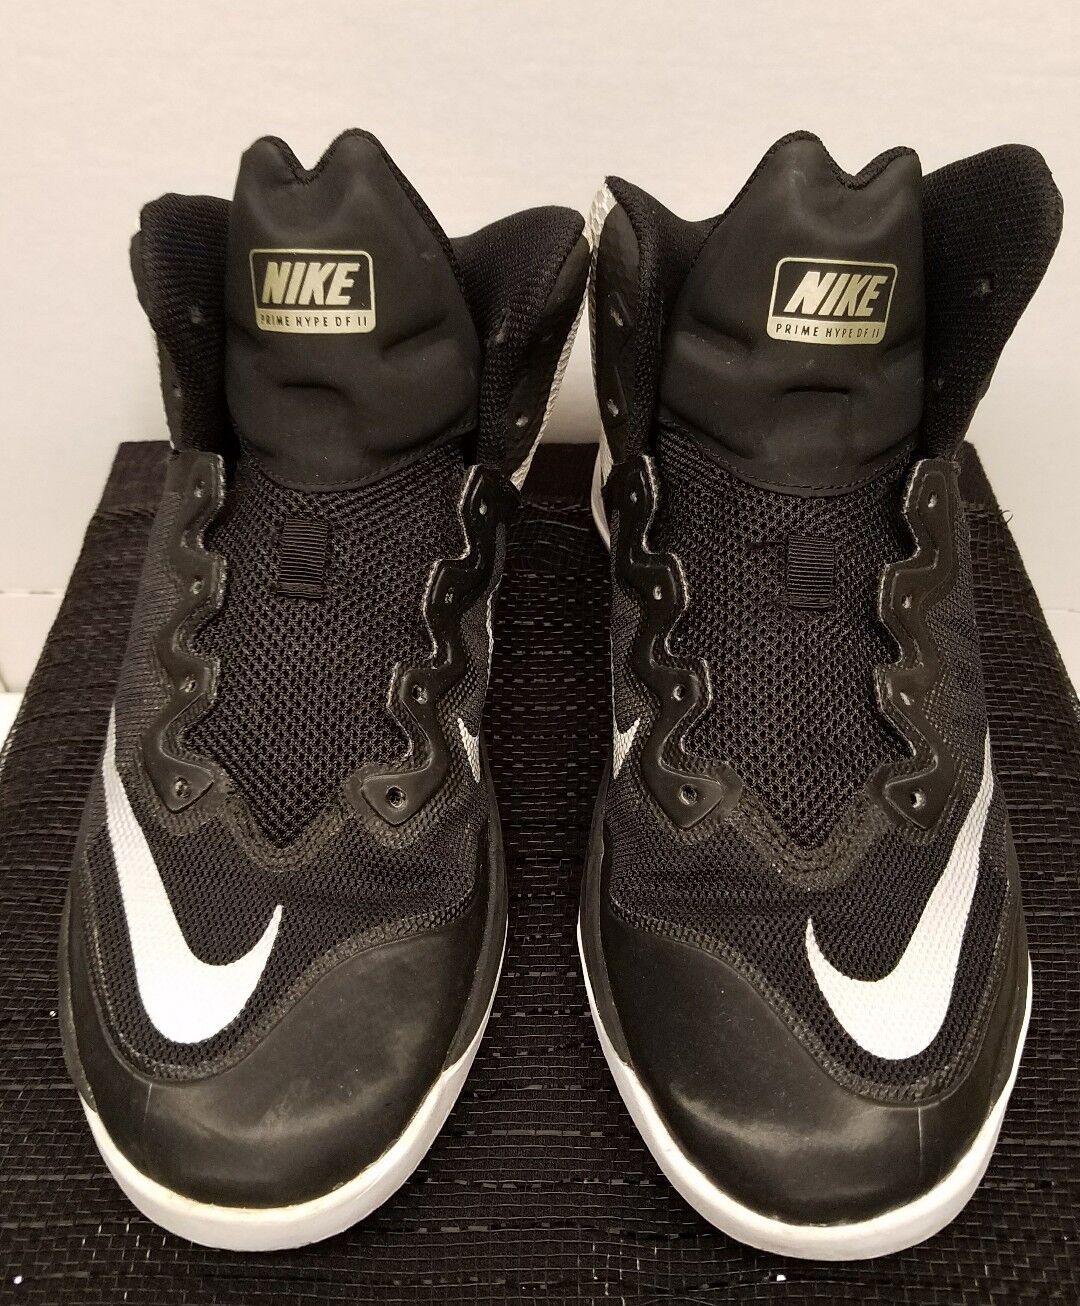 Nike Prime Hype DF ll Basketball Shoes Size 7Y Black White 807613-001